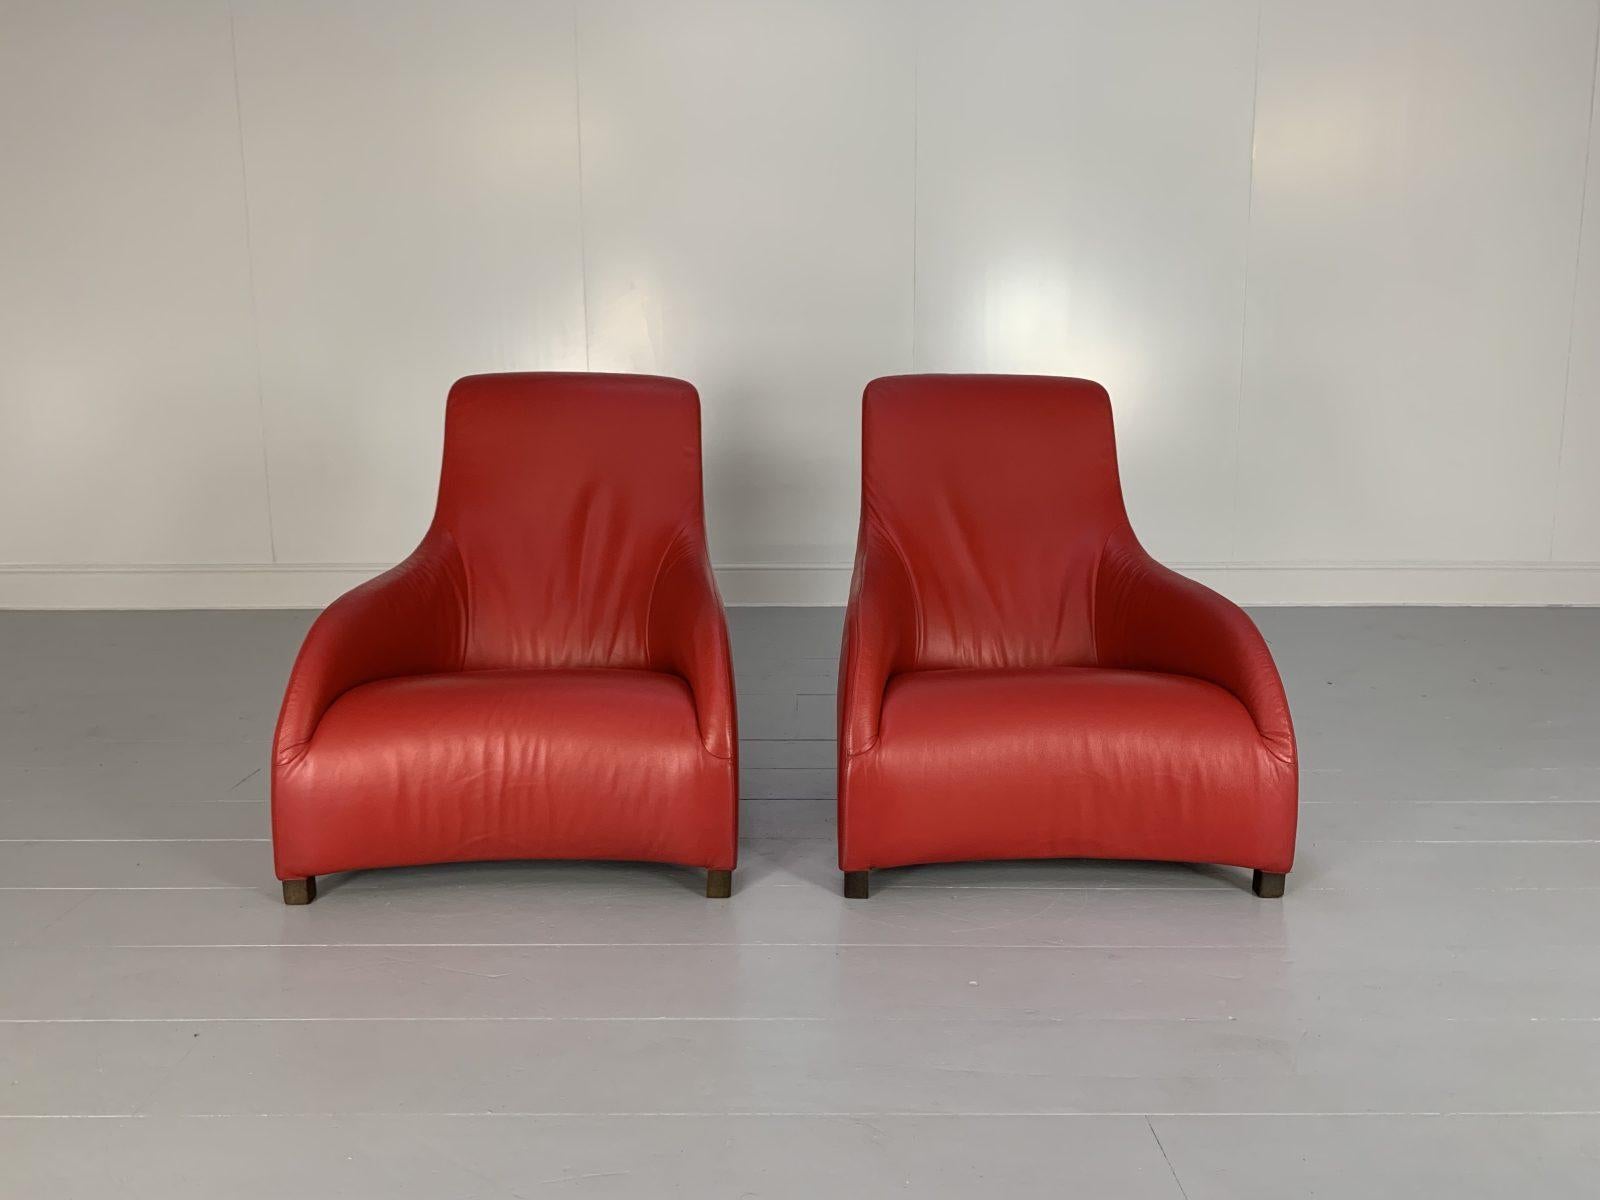 B&B Italia Armchairs, “Maxalto Kalos 9750”, in Red “Gamma” Leather In Good Condition For Sale In Barrowford, GB